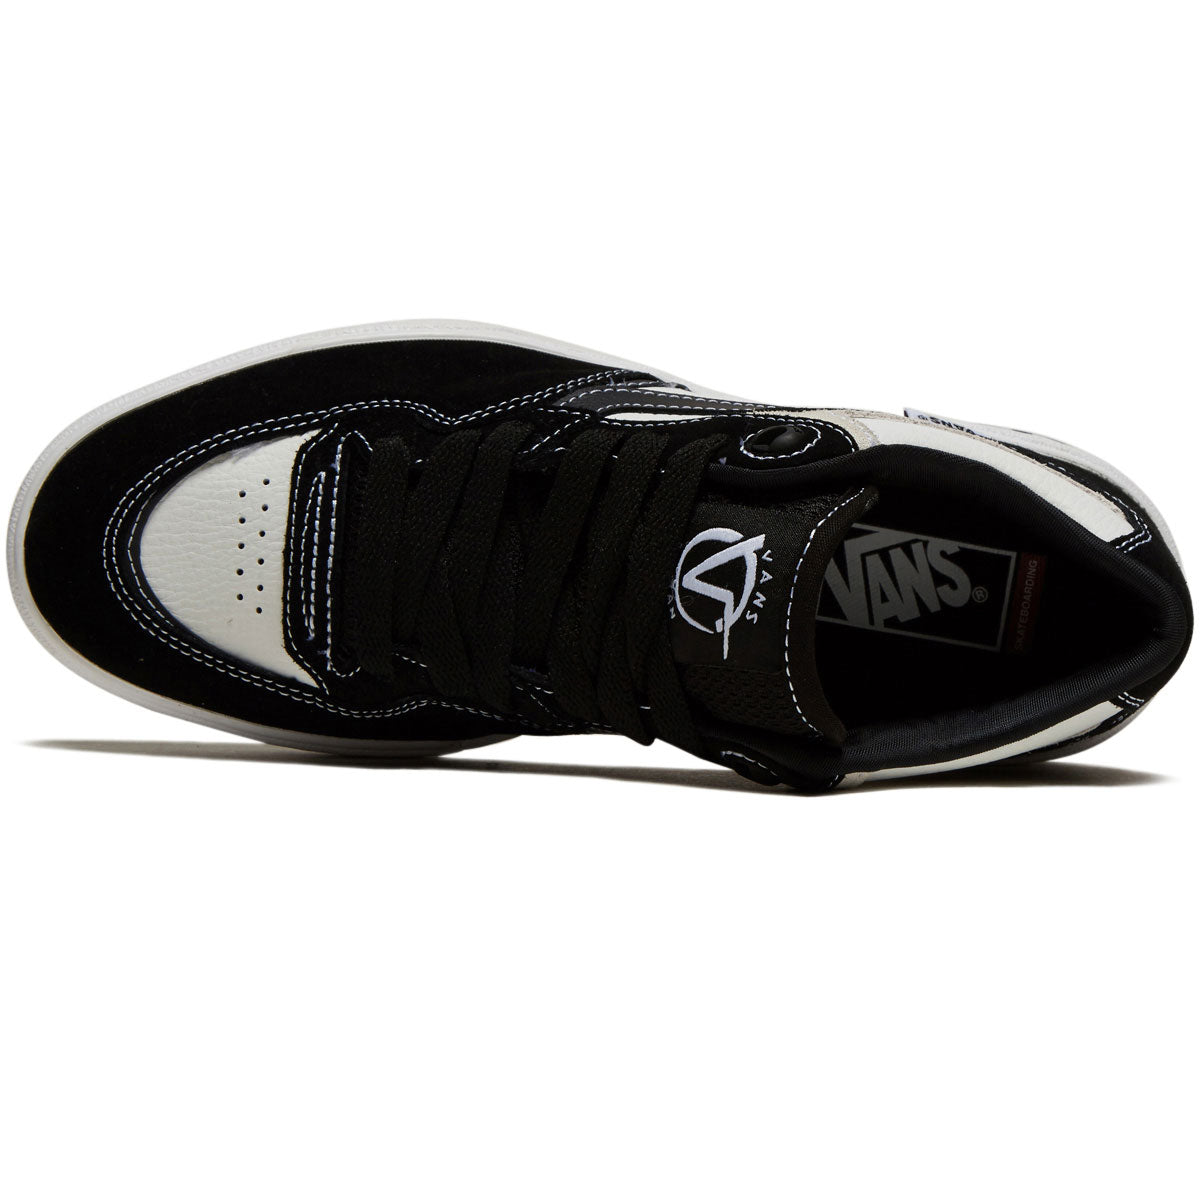 Vans Rowan 2 Shoes - Black/Black/White image 3